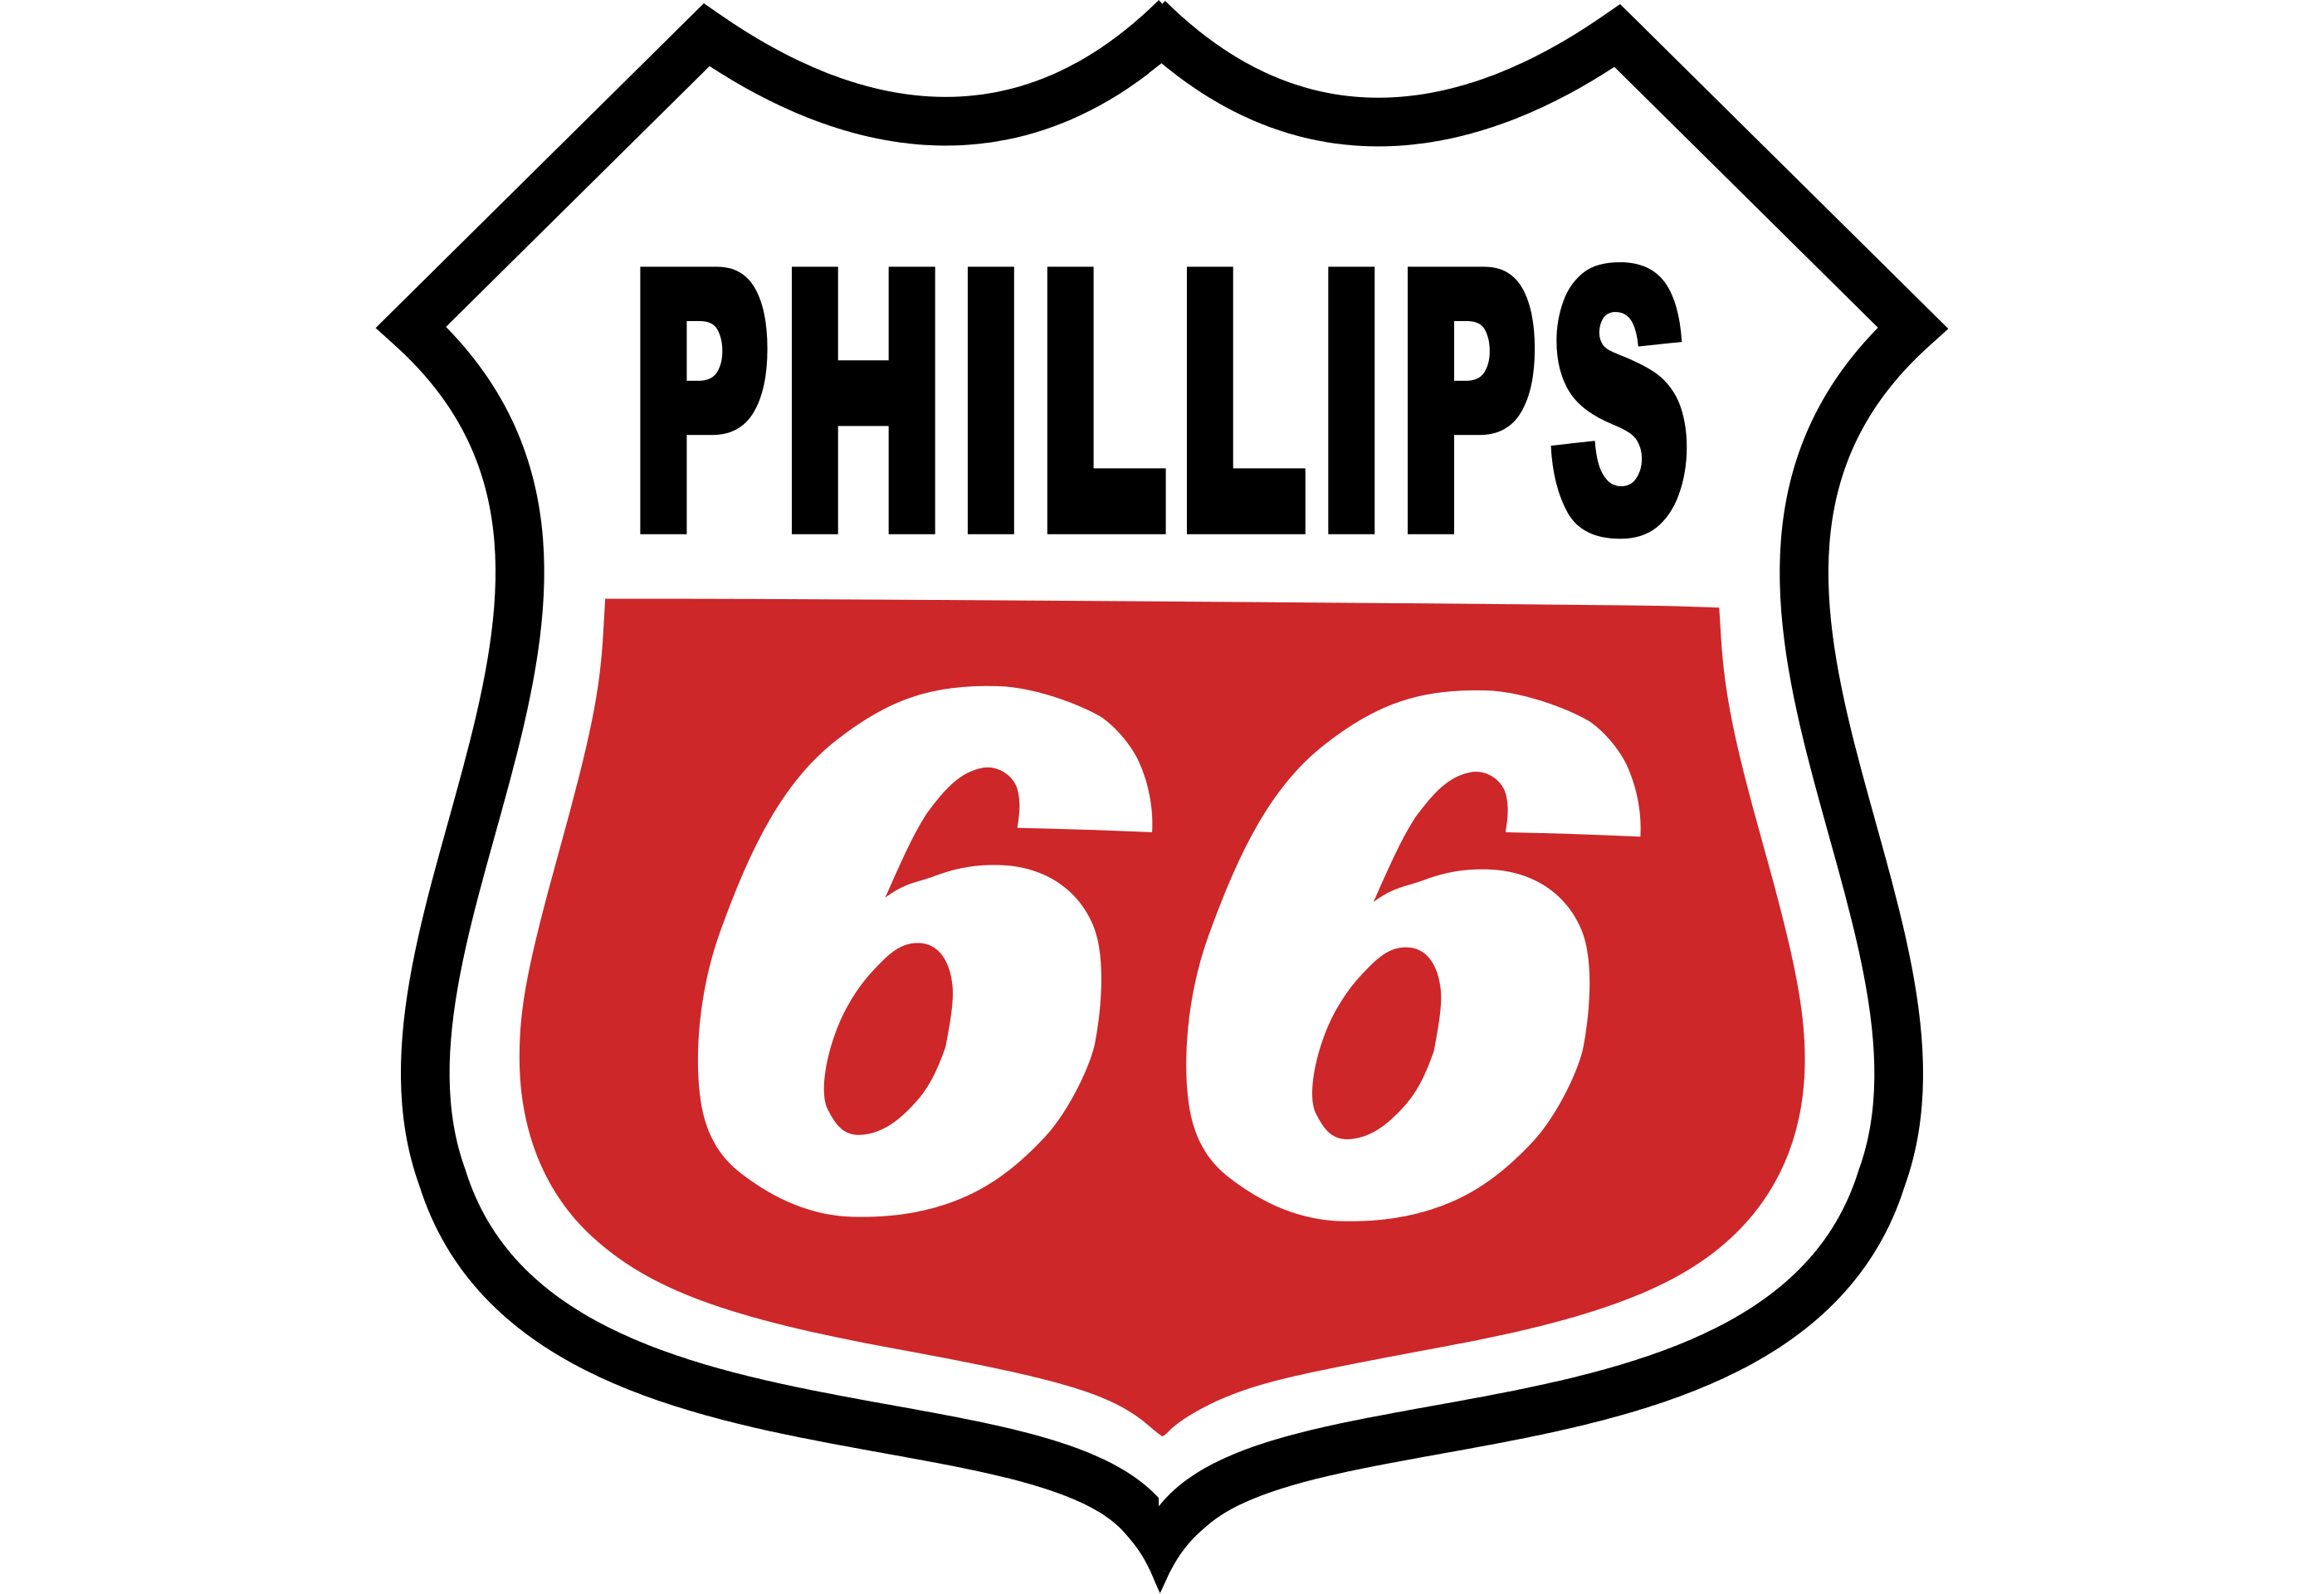 phillips66